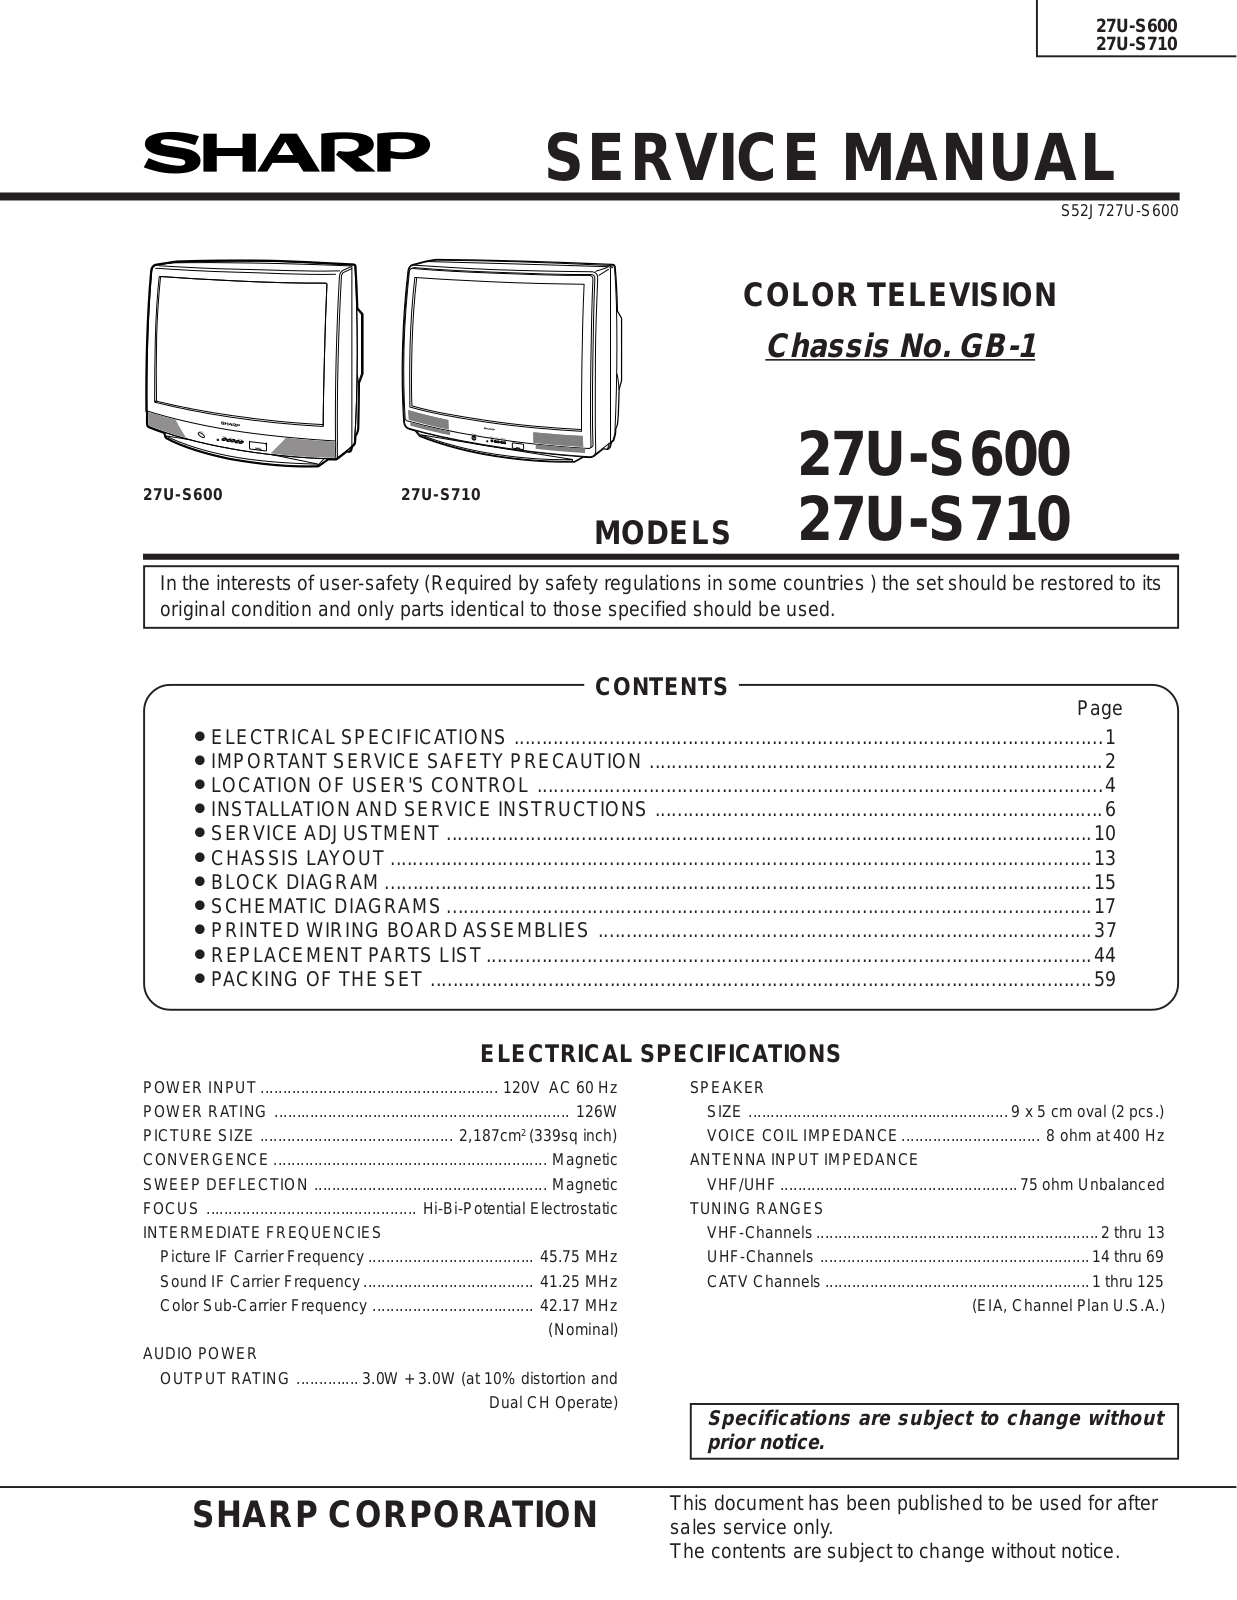 SHARP 27US600, US710 Service Manual